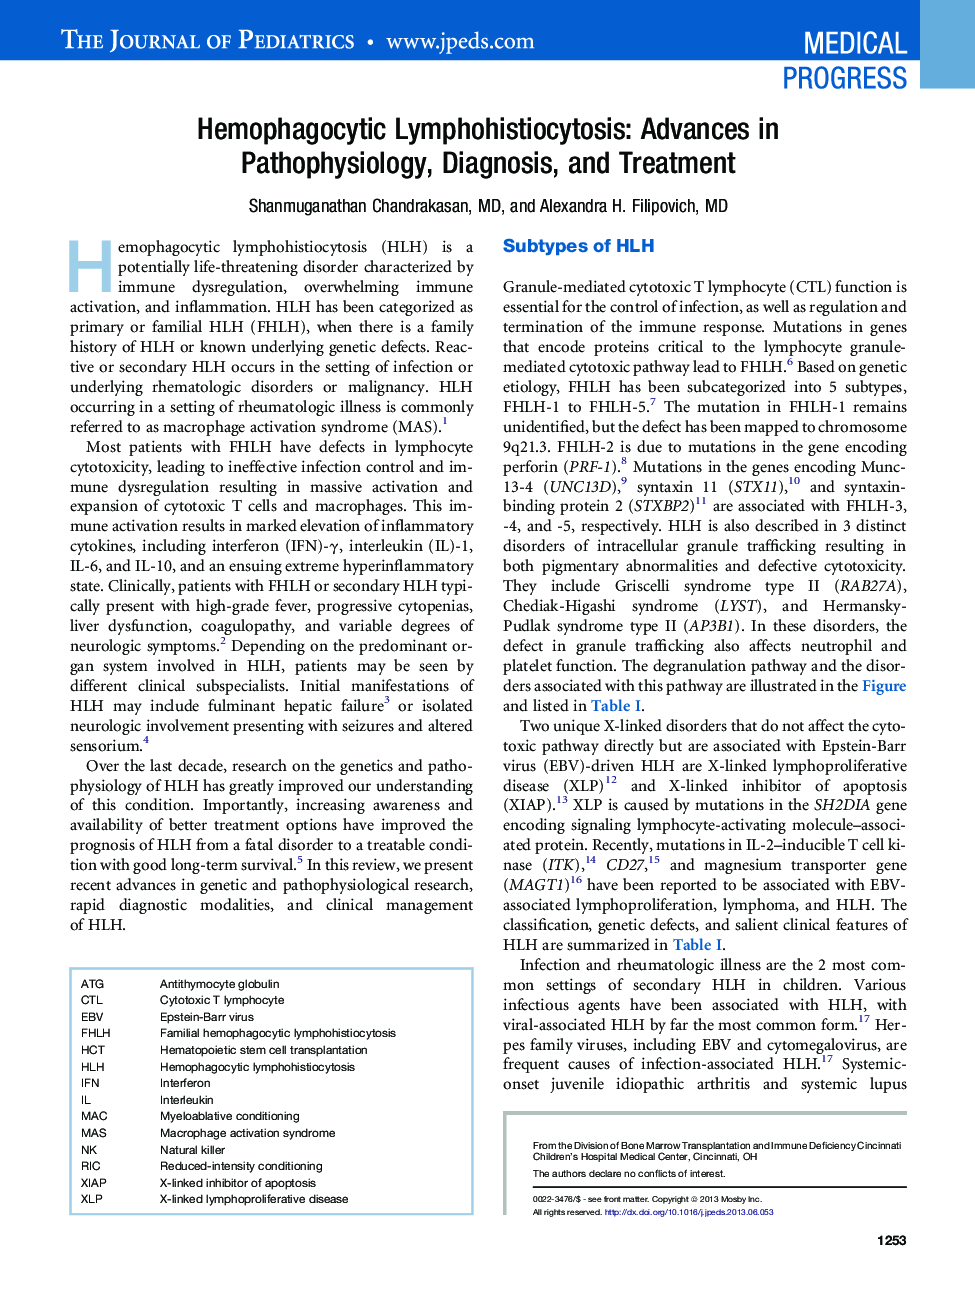 Hemophagocytic Lymphohistiocytosis: Advances in Pathophysiology, Diagnosis, and Treatment